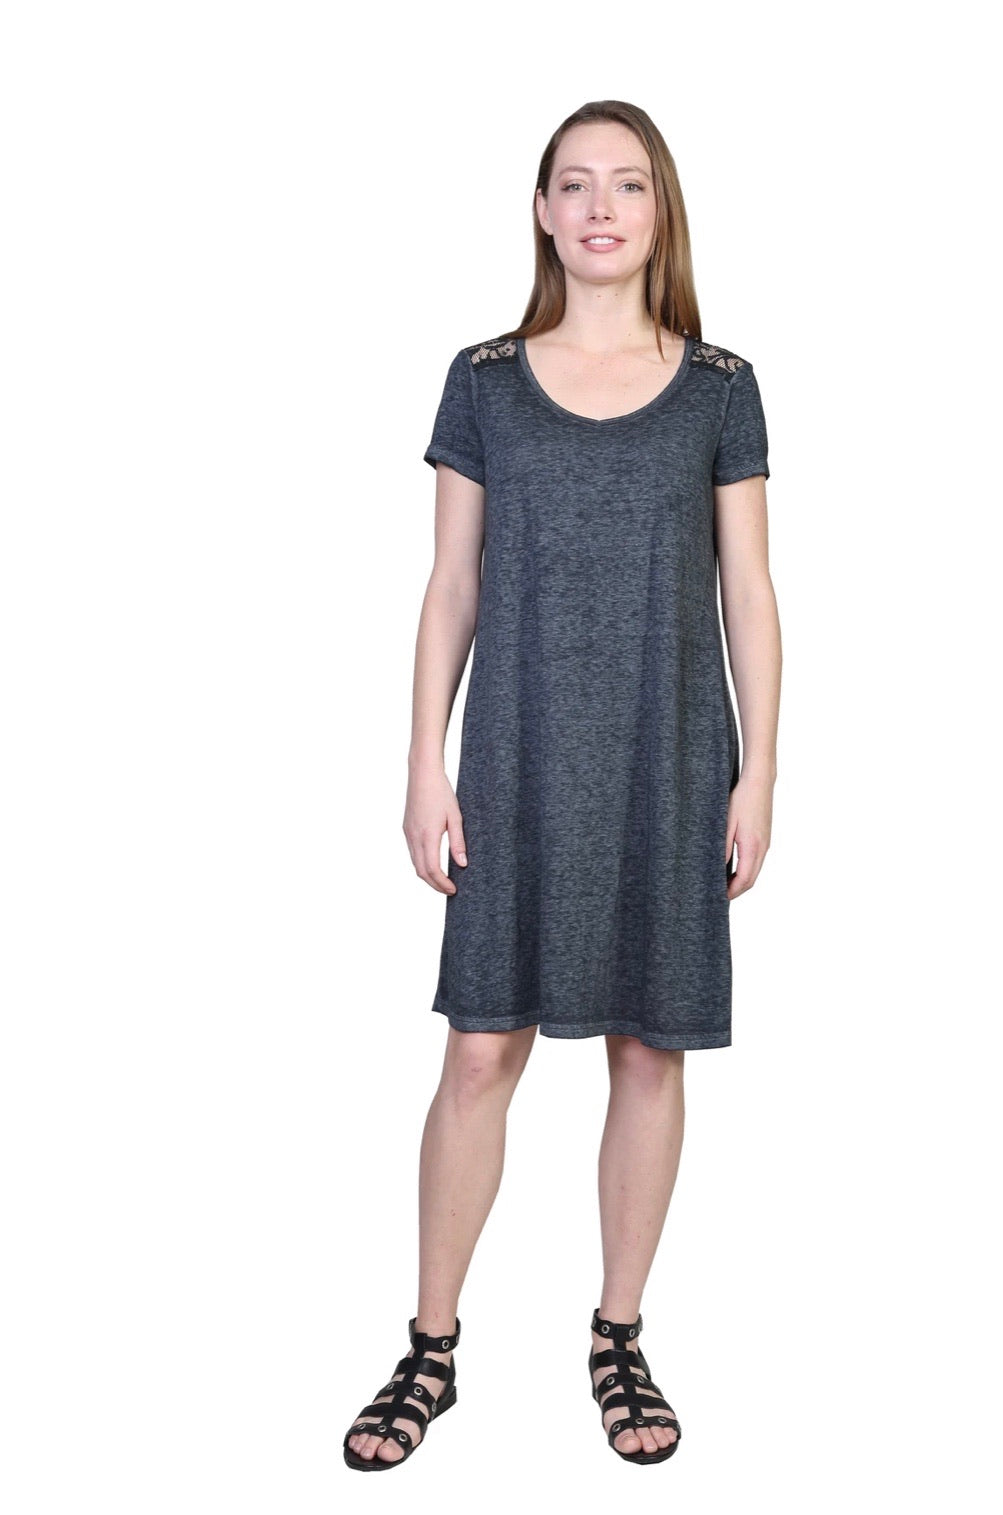 Soft & Supple Knit Dress with Lace Trim - Size 1 X